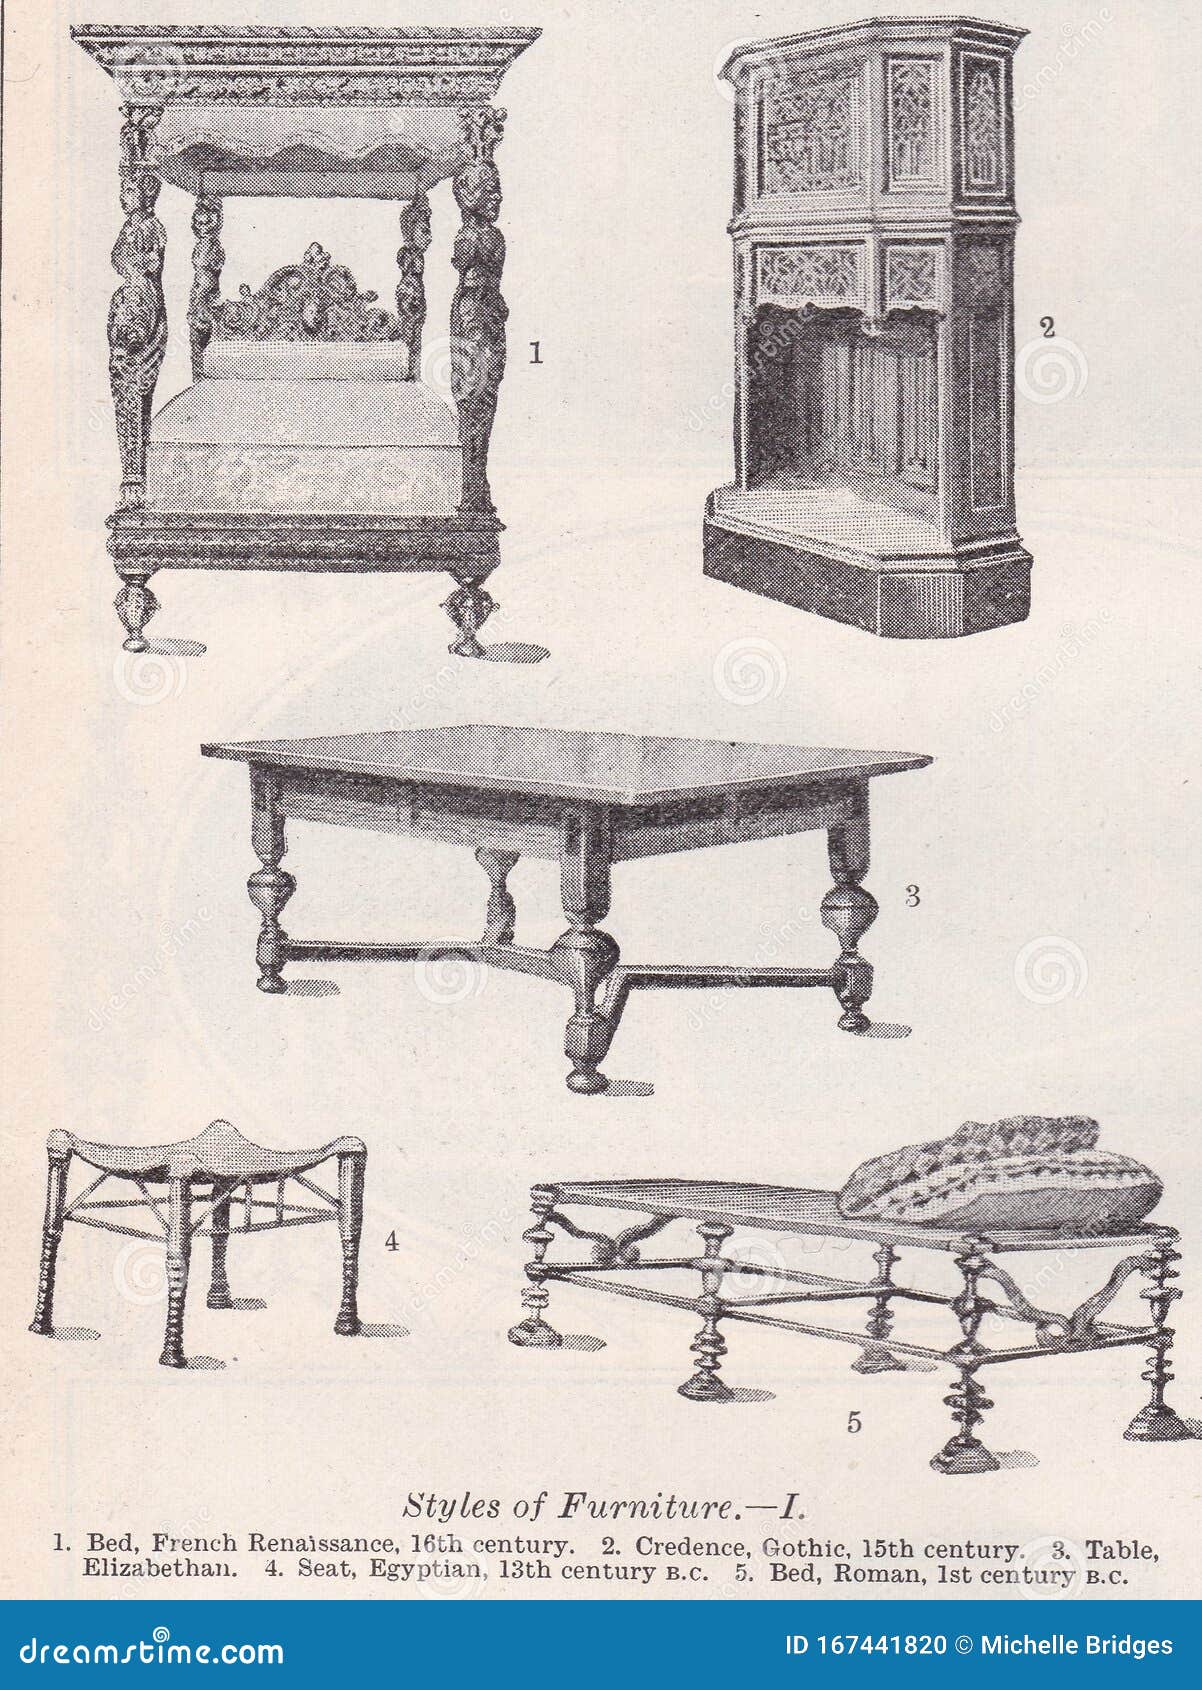 Jacques Androuet Du Cerceau  Furniture Design  The Metropolitan Museum of  Art